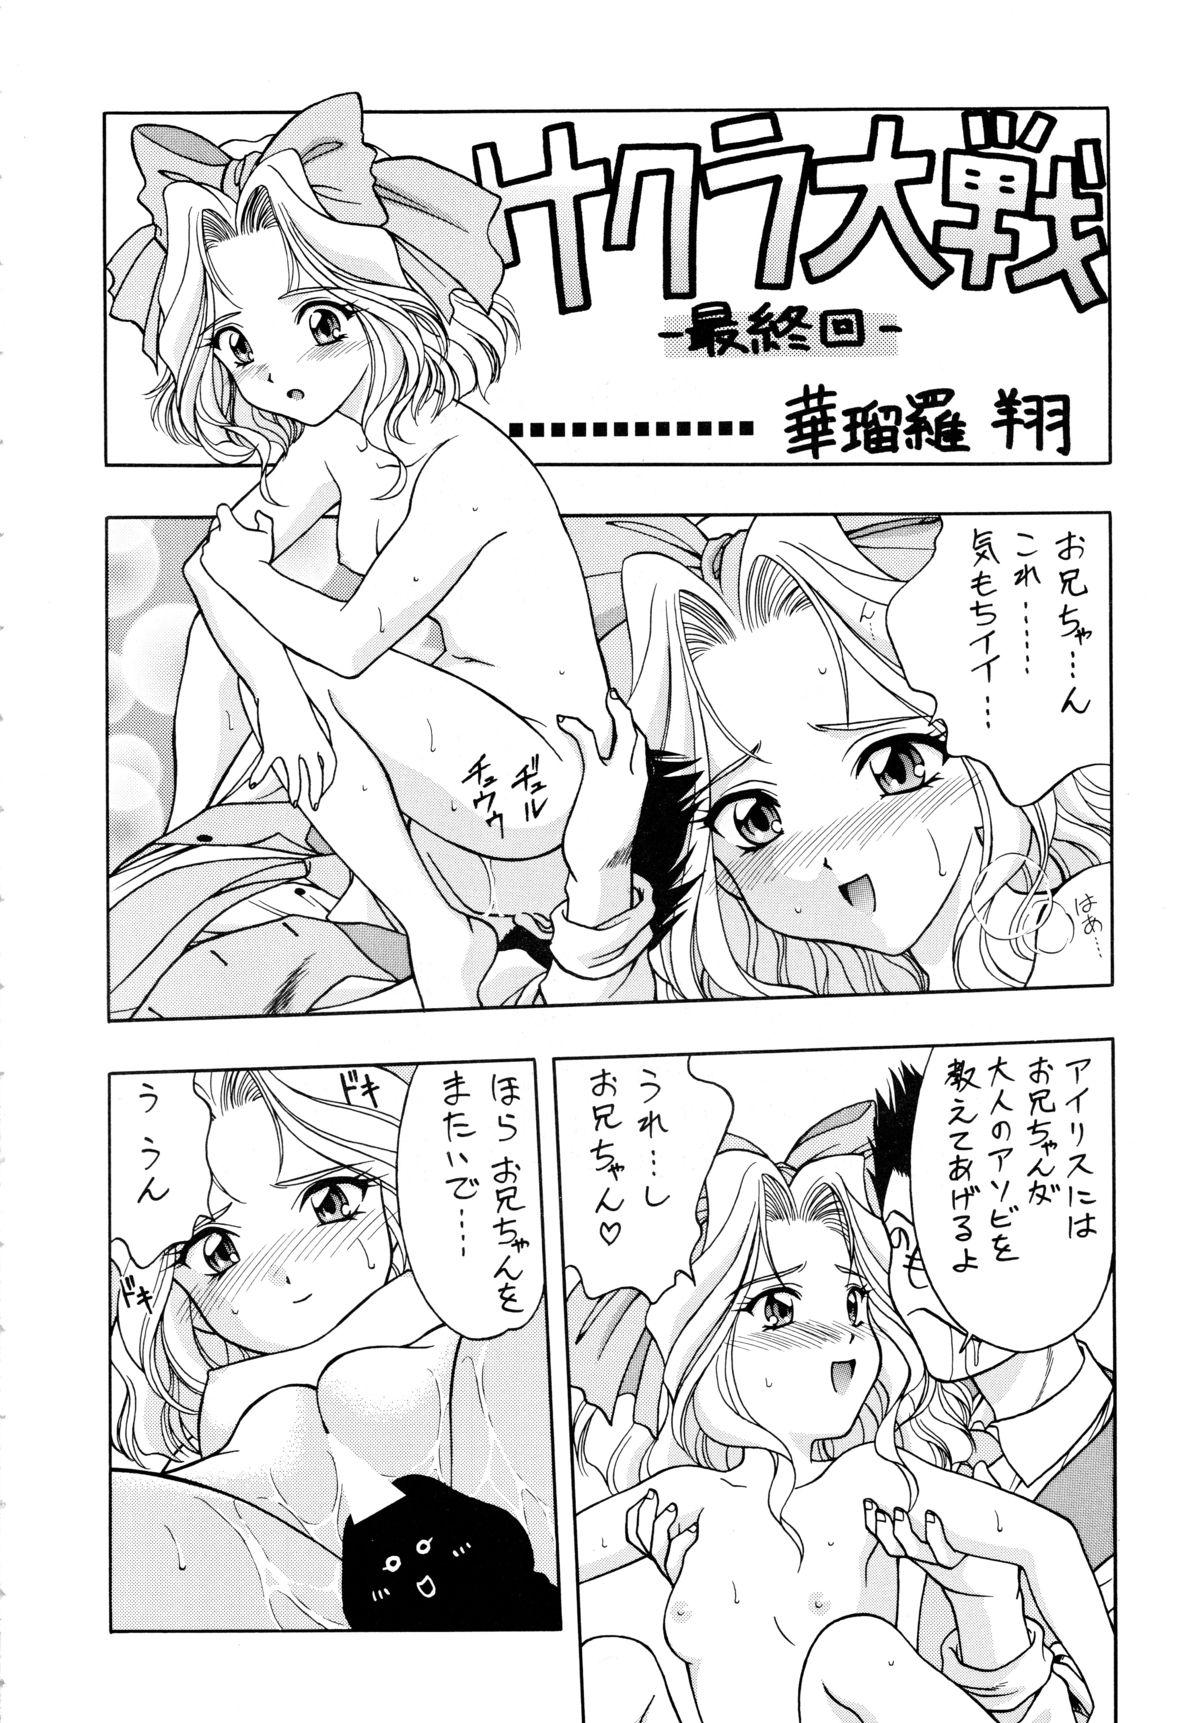 Mum LOVE² BREATH - Sakura taisen Martian successor nadesico Tokimeki memorial Youre under arrest Pareja - Page 4